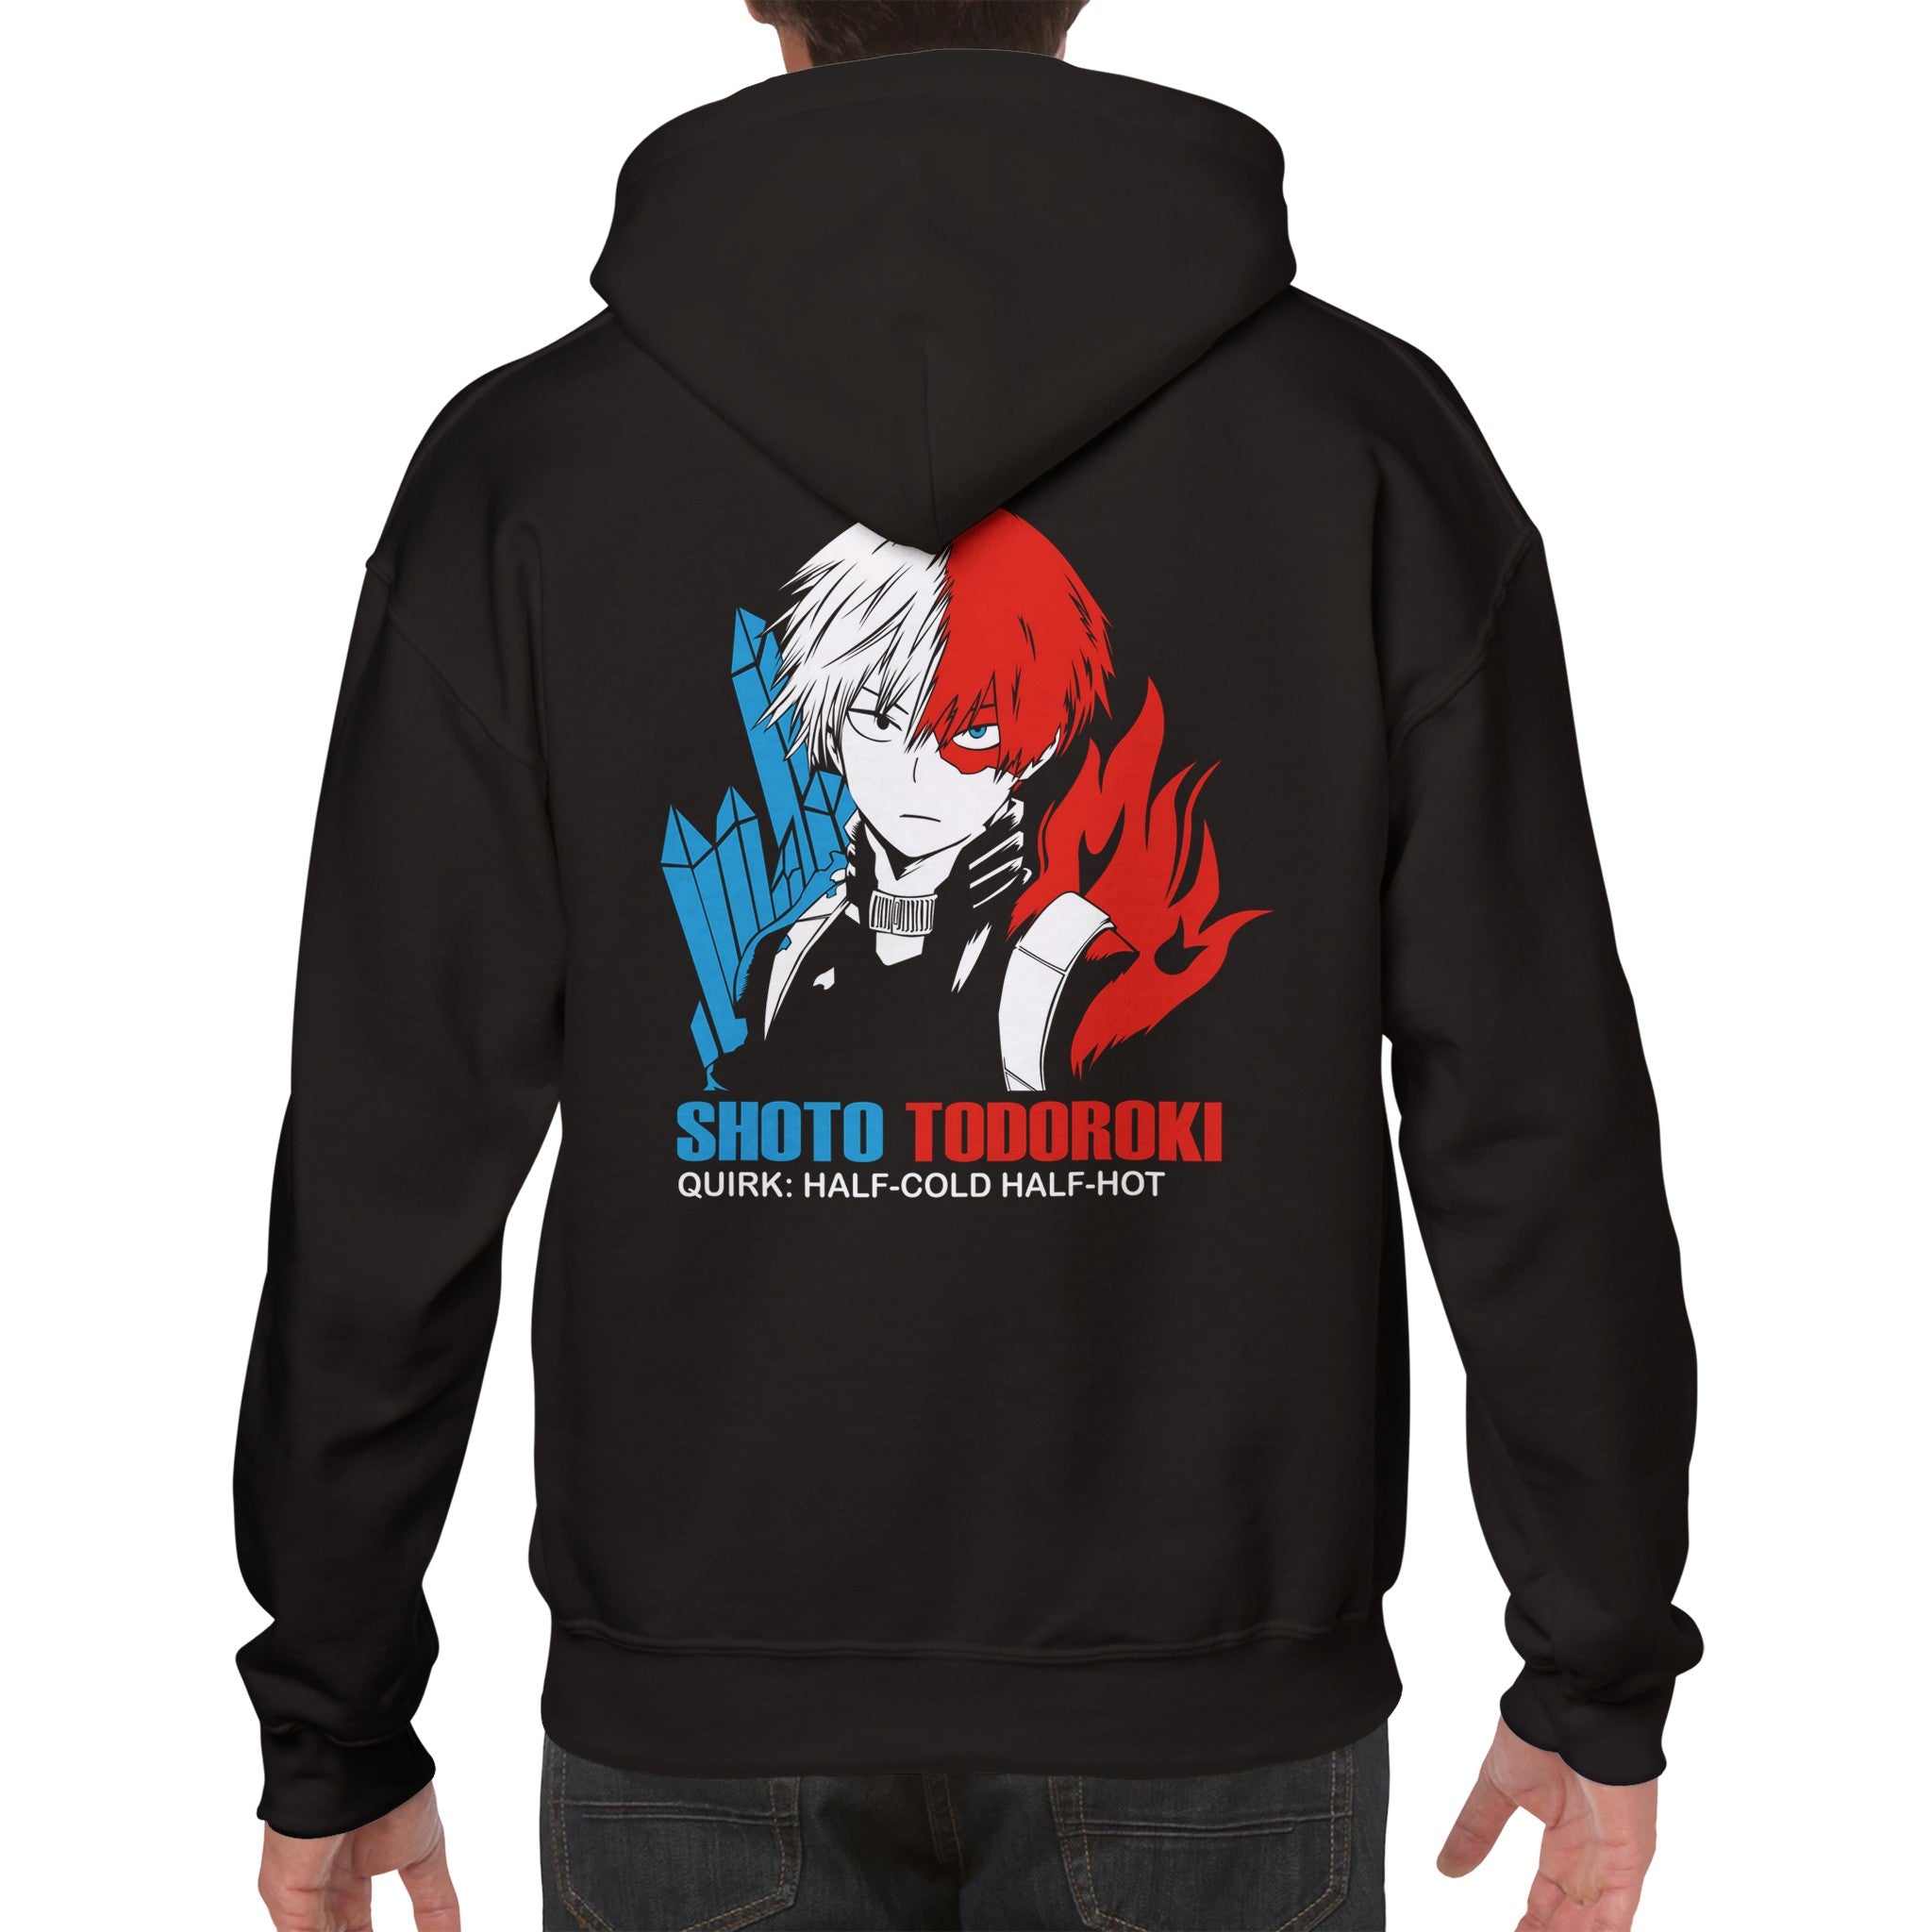 shop and buy my hero academia anime clothing todoroki hoodie